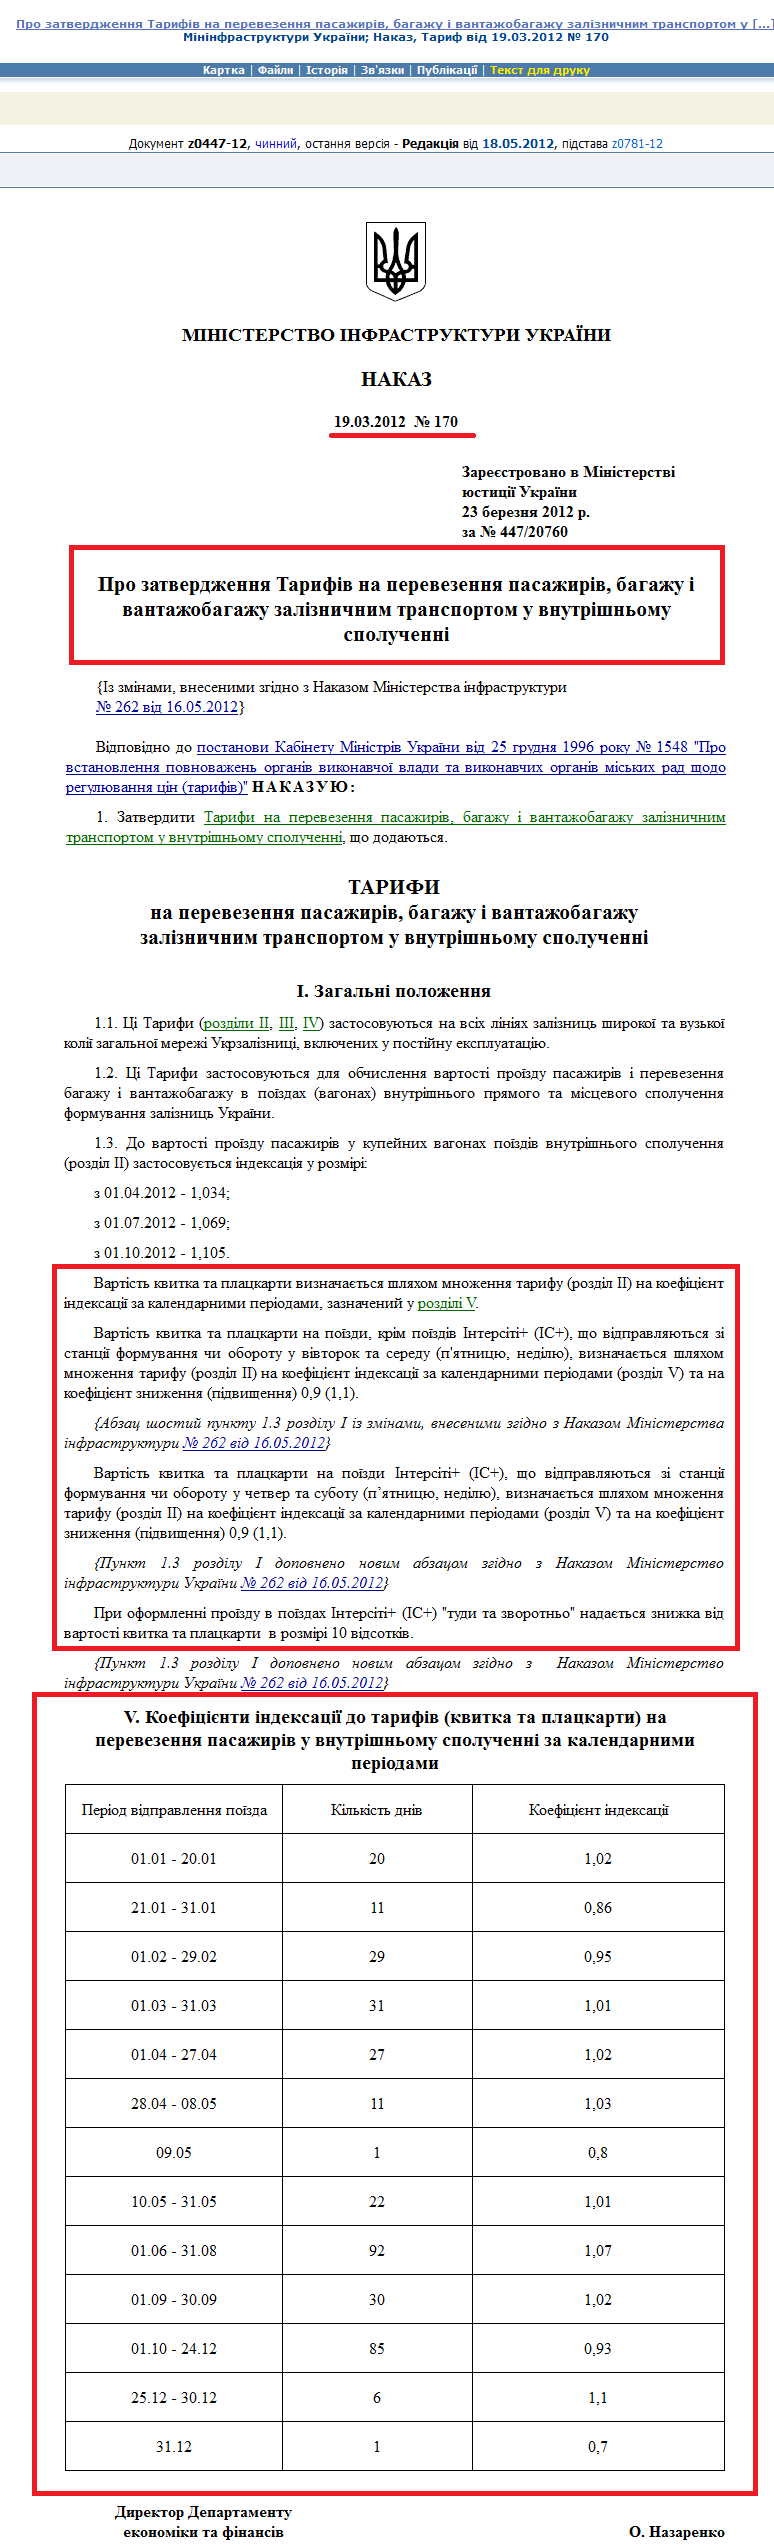 http://zakon2.rada.gov.ua/laws/show/z0447-12